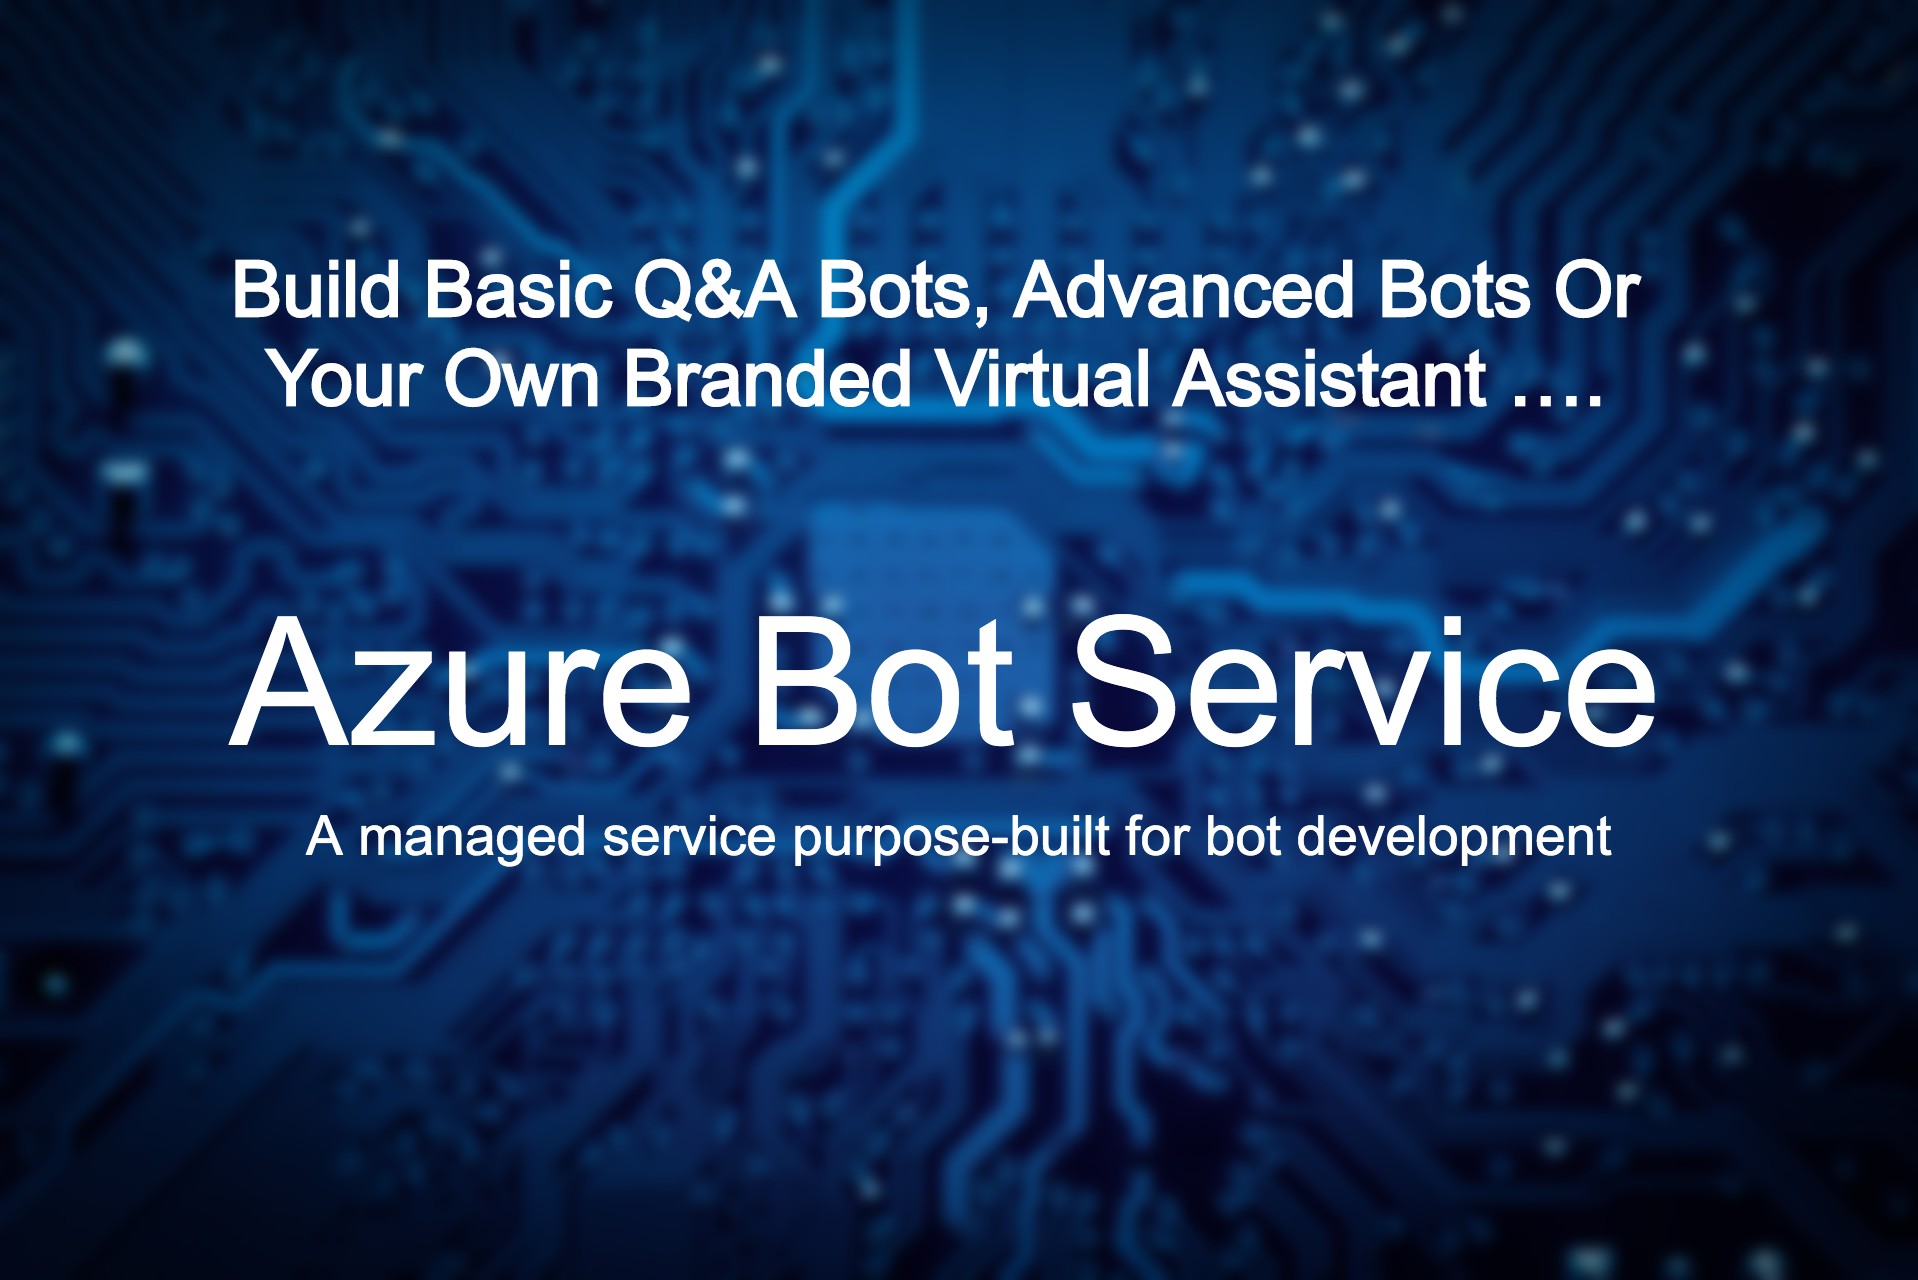 Build basic to advanced Bots with Microsoft Azure Bot Service